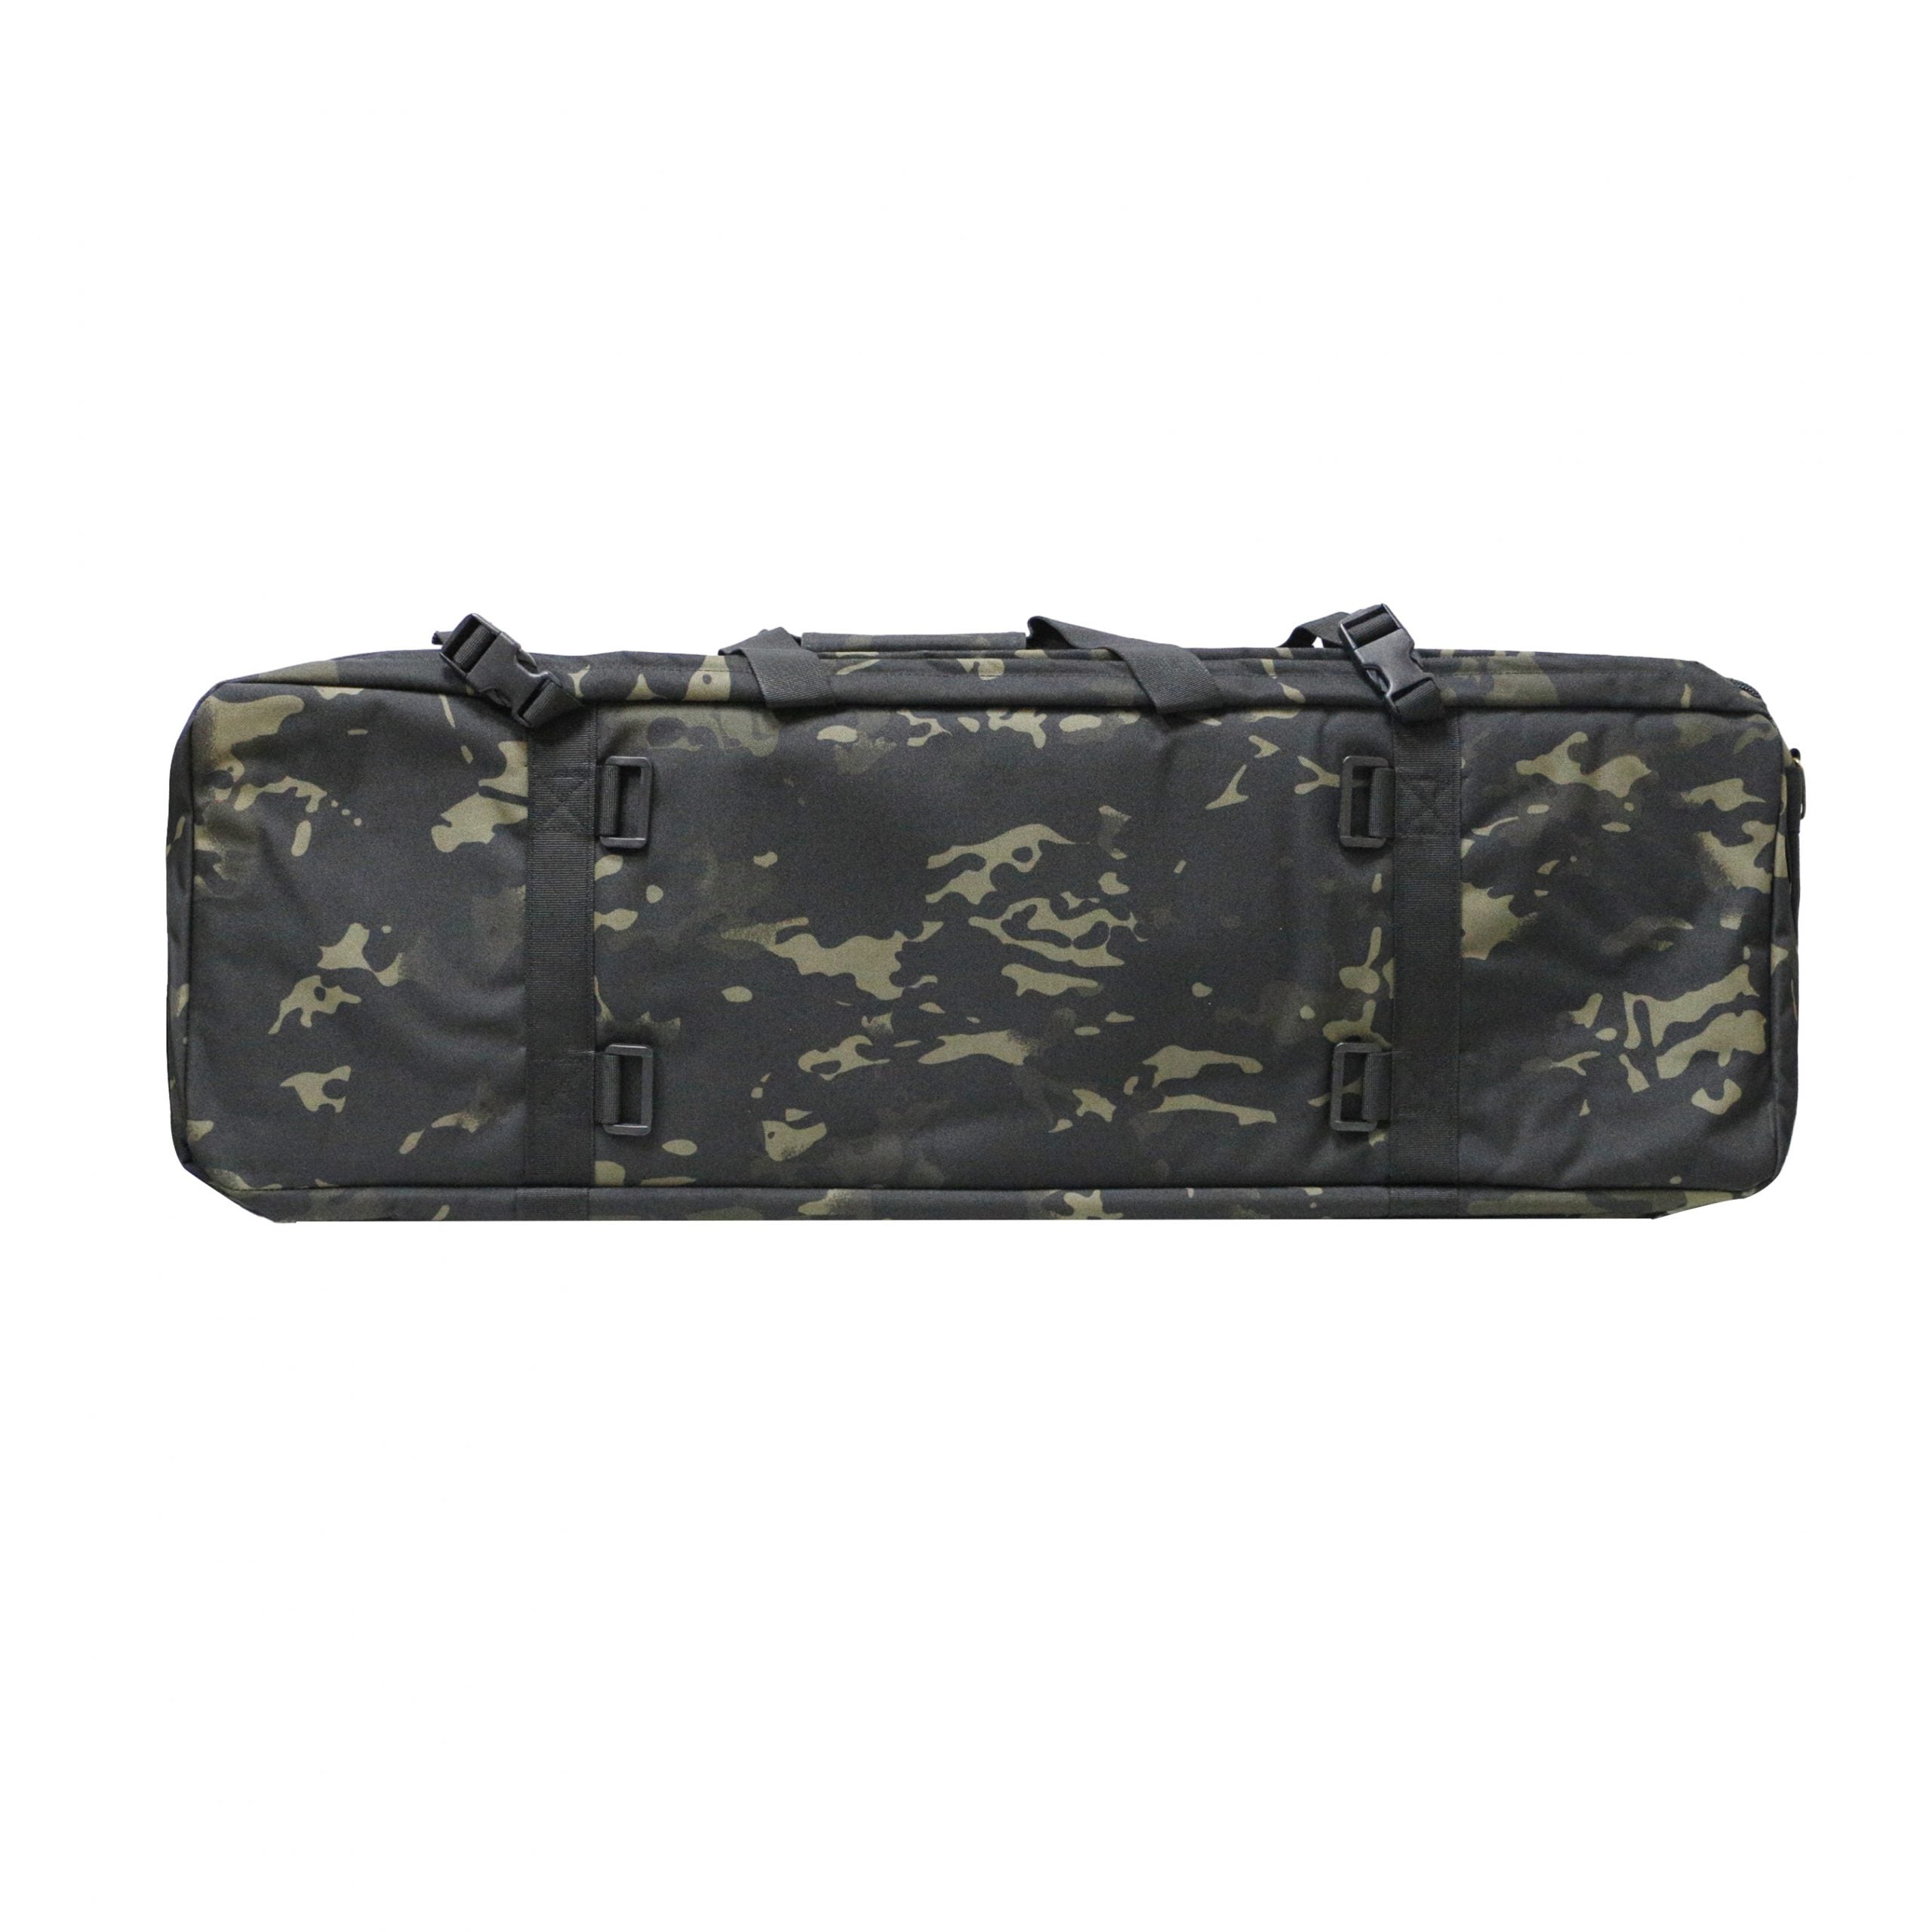 Soetac Large Capacity Rifle Bag